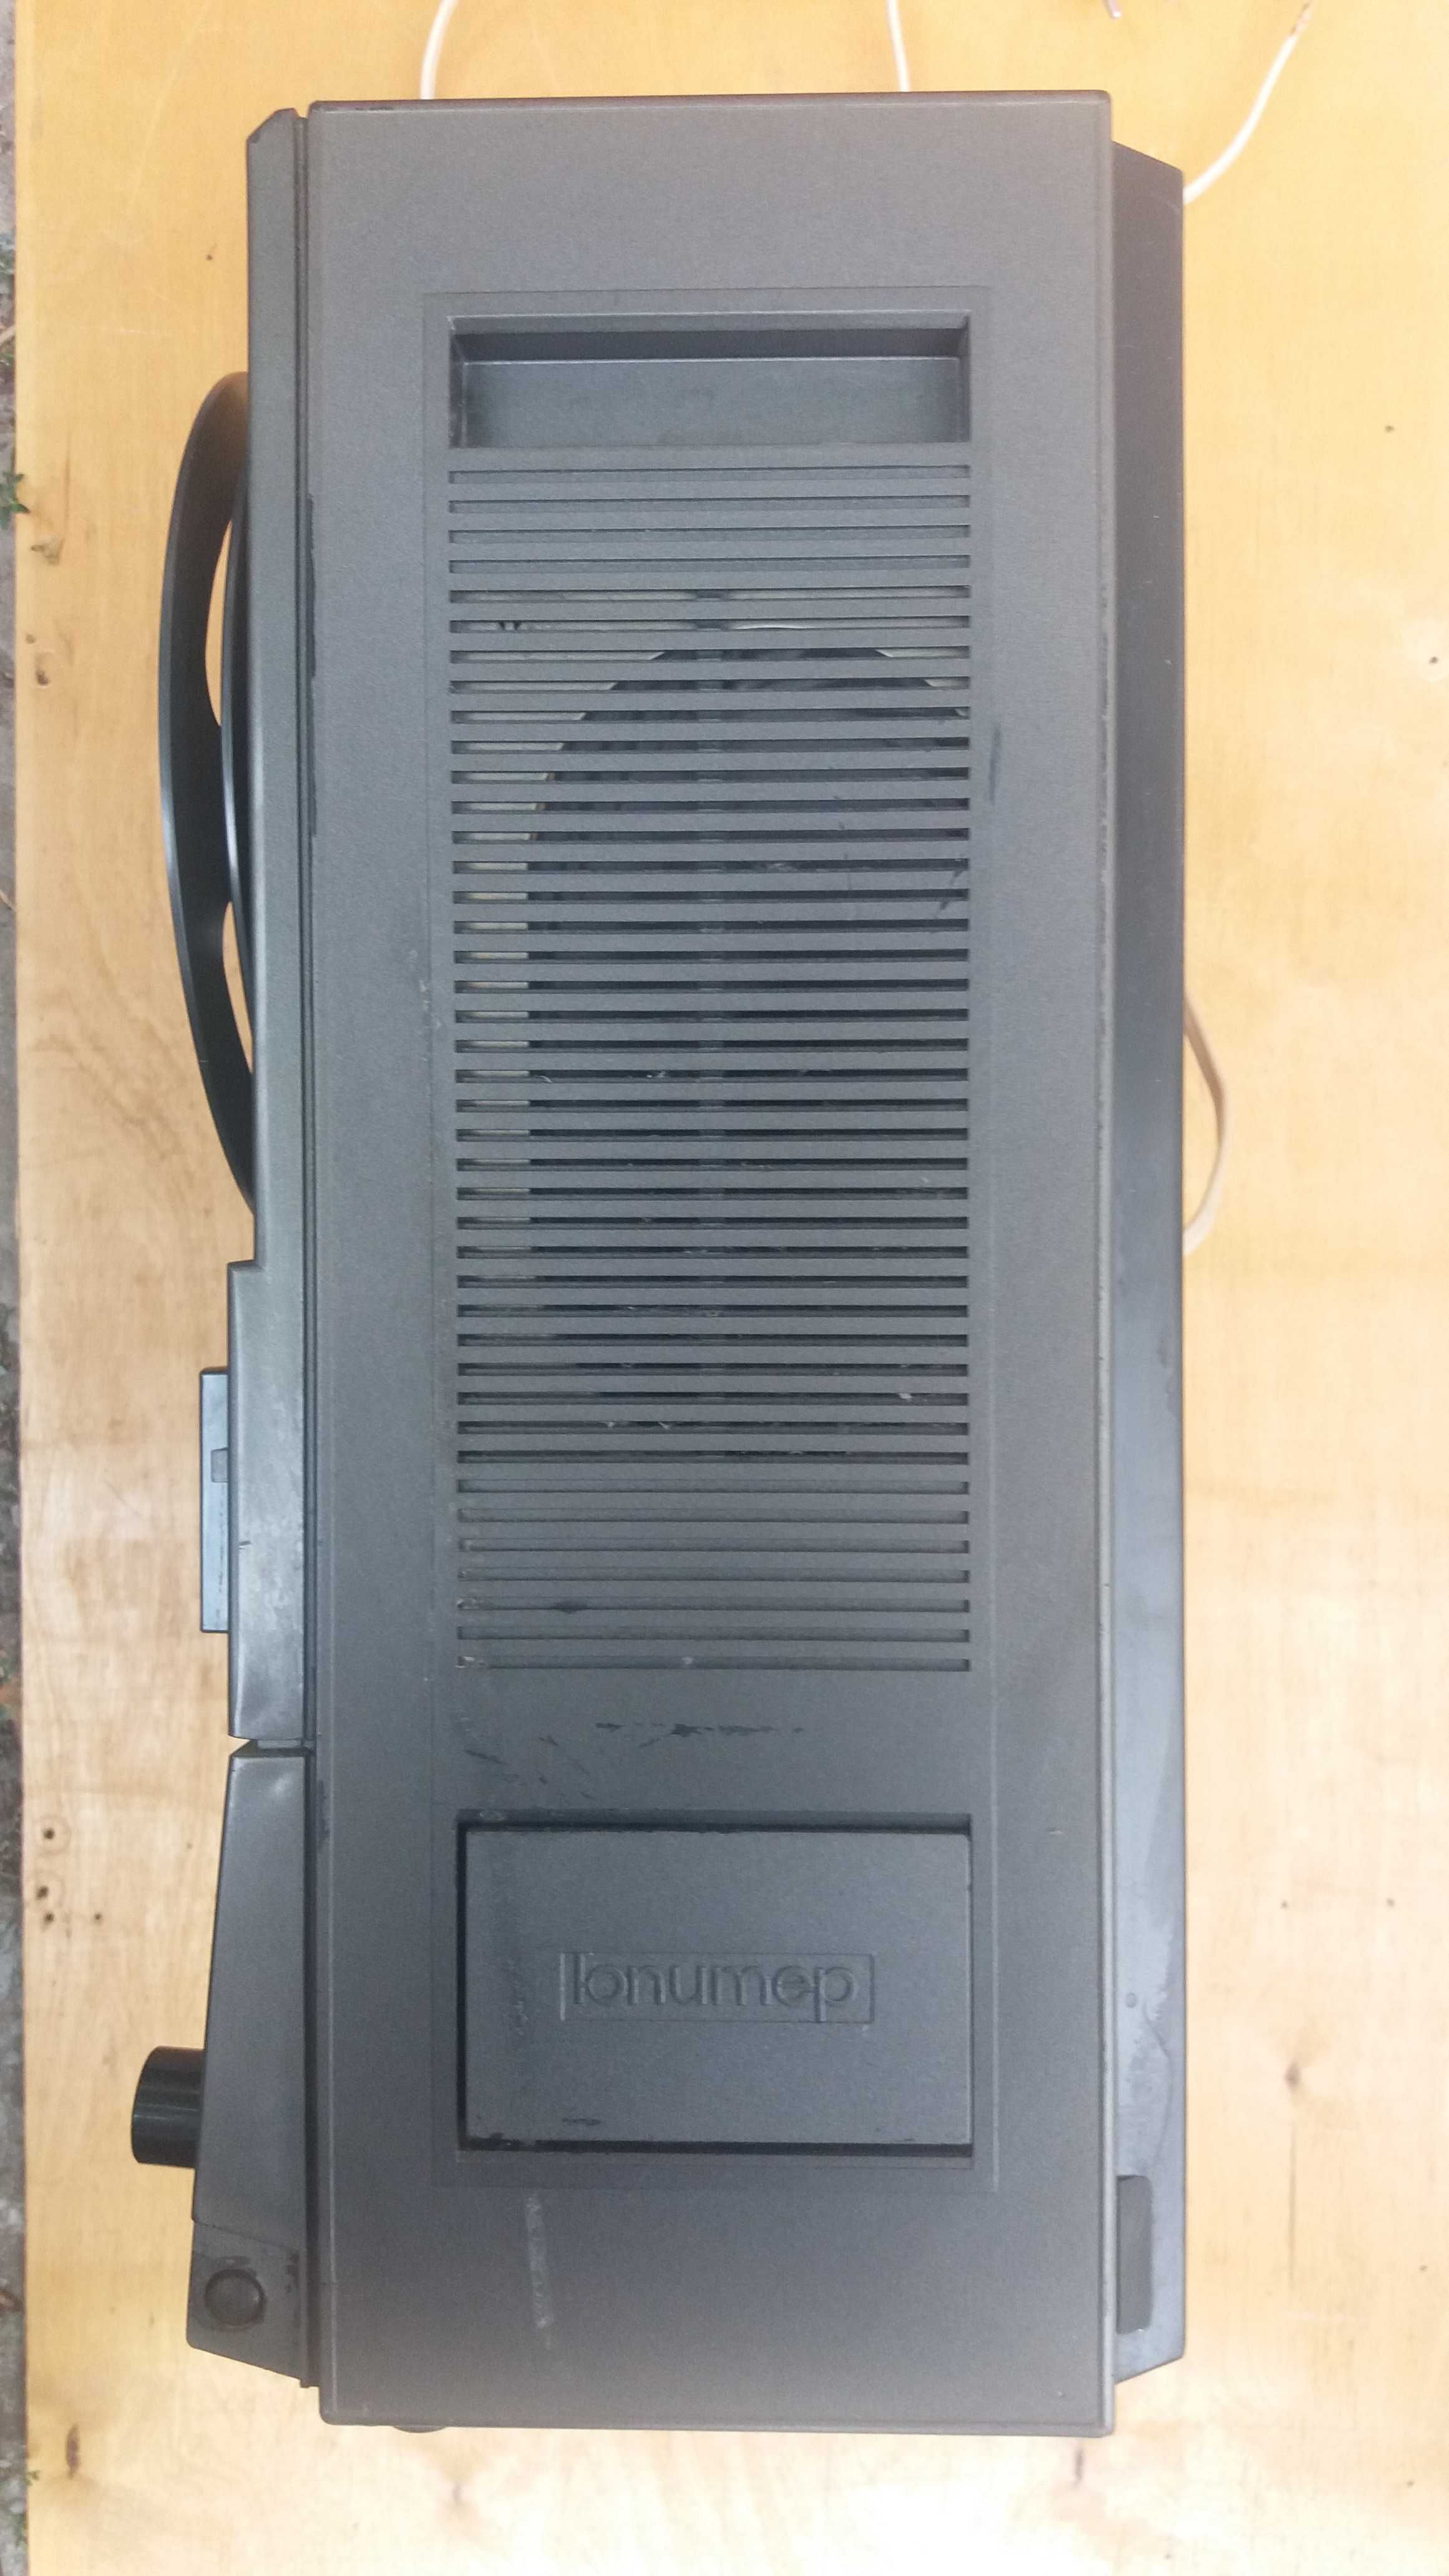 Продам старый бобинный магнитофон Юпитер МК-106 С